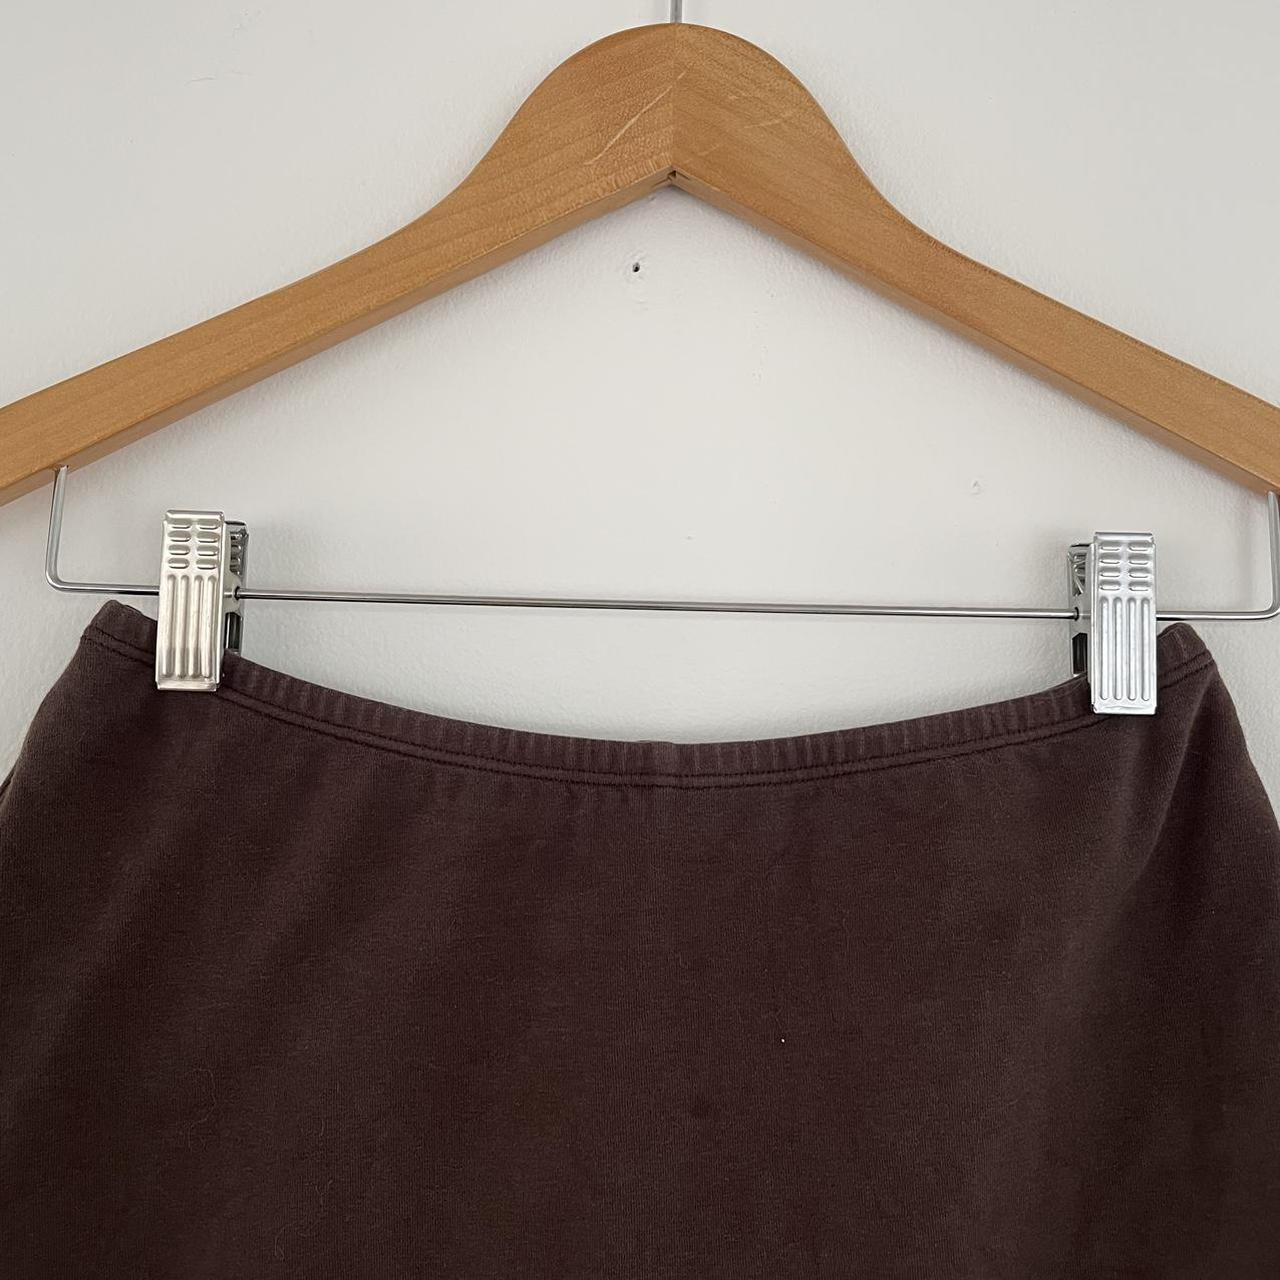 American Apparel Women's Brown Skirt (2)